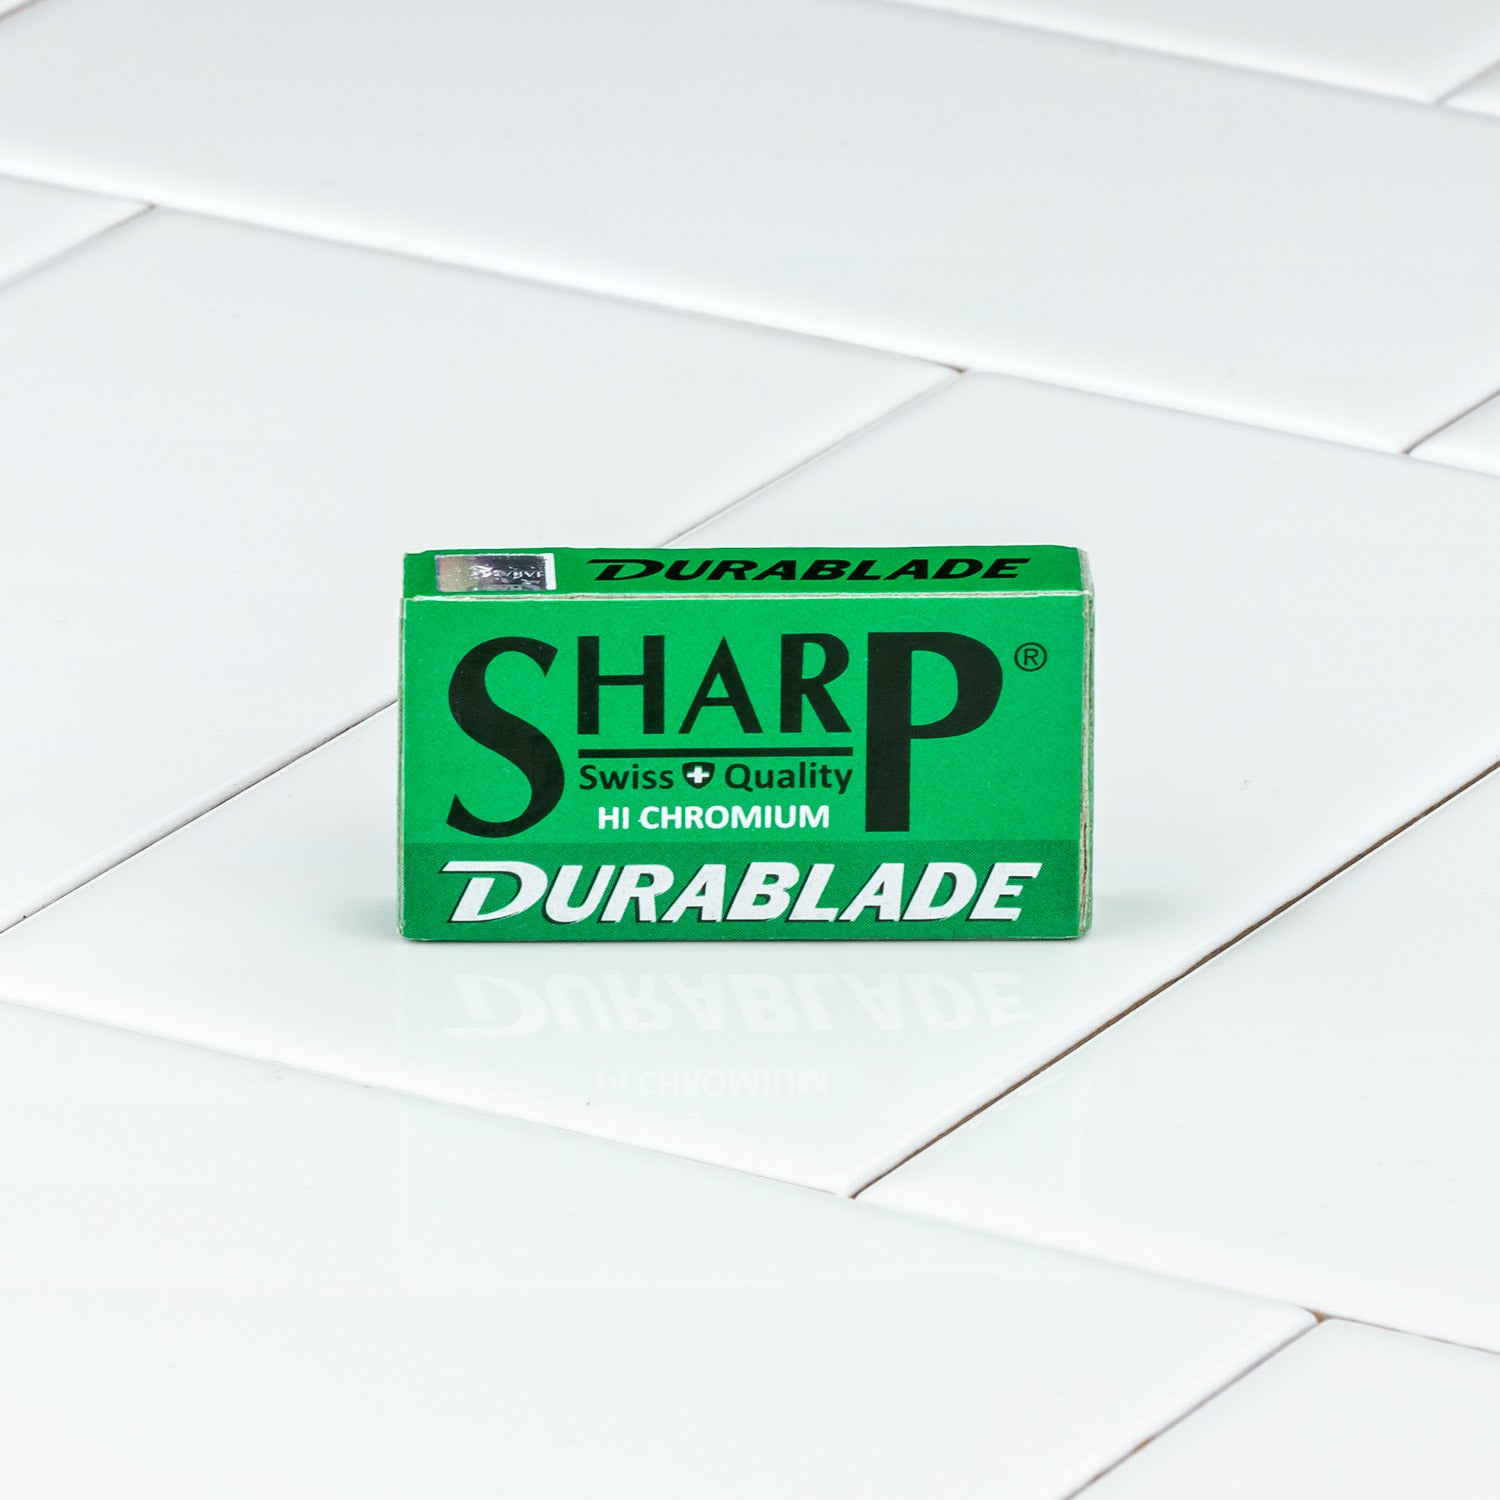 Sharp Durablade Stainless Double Edge Razor Blades, 10 Pack